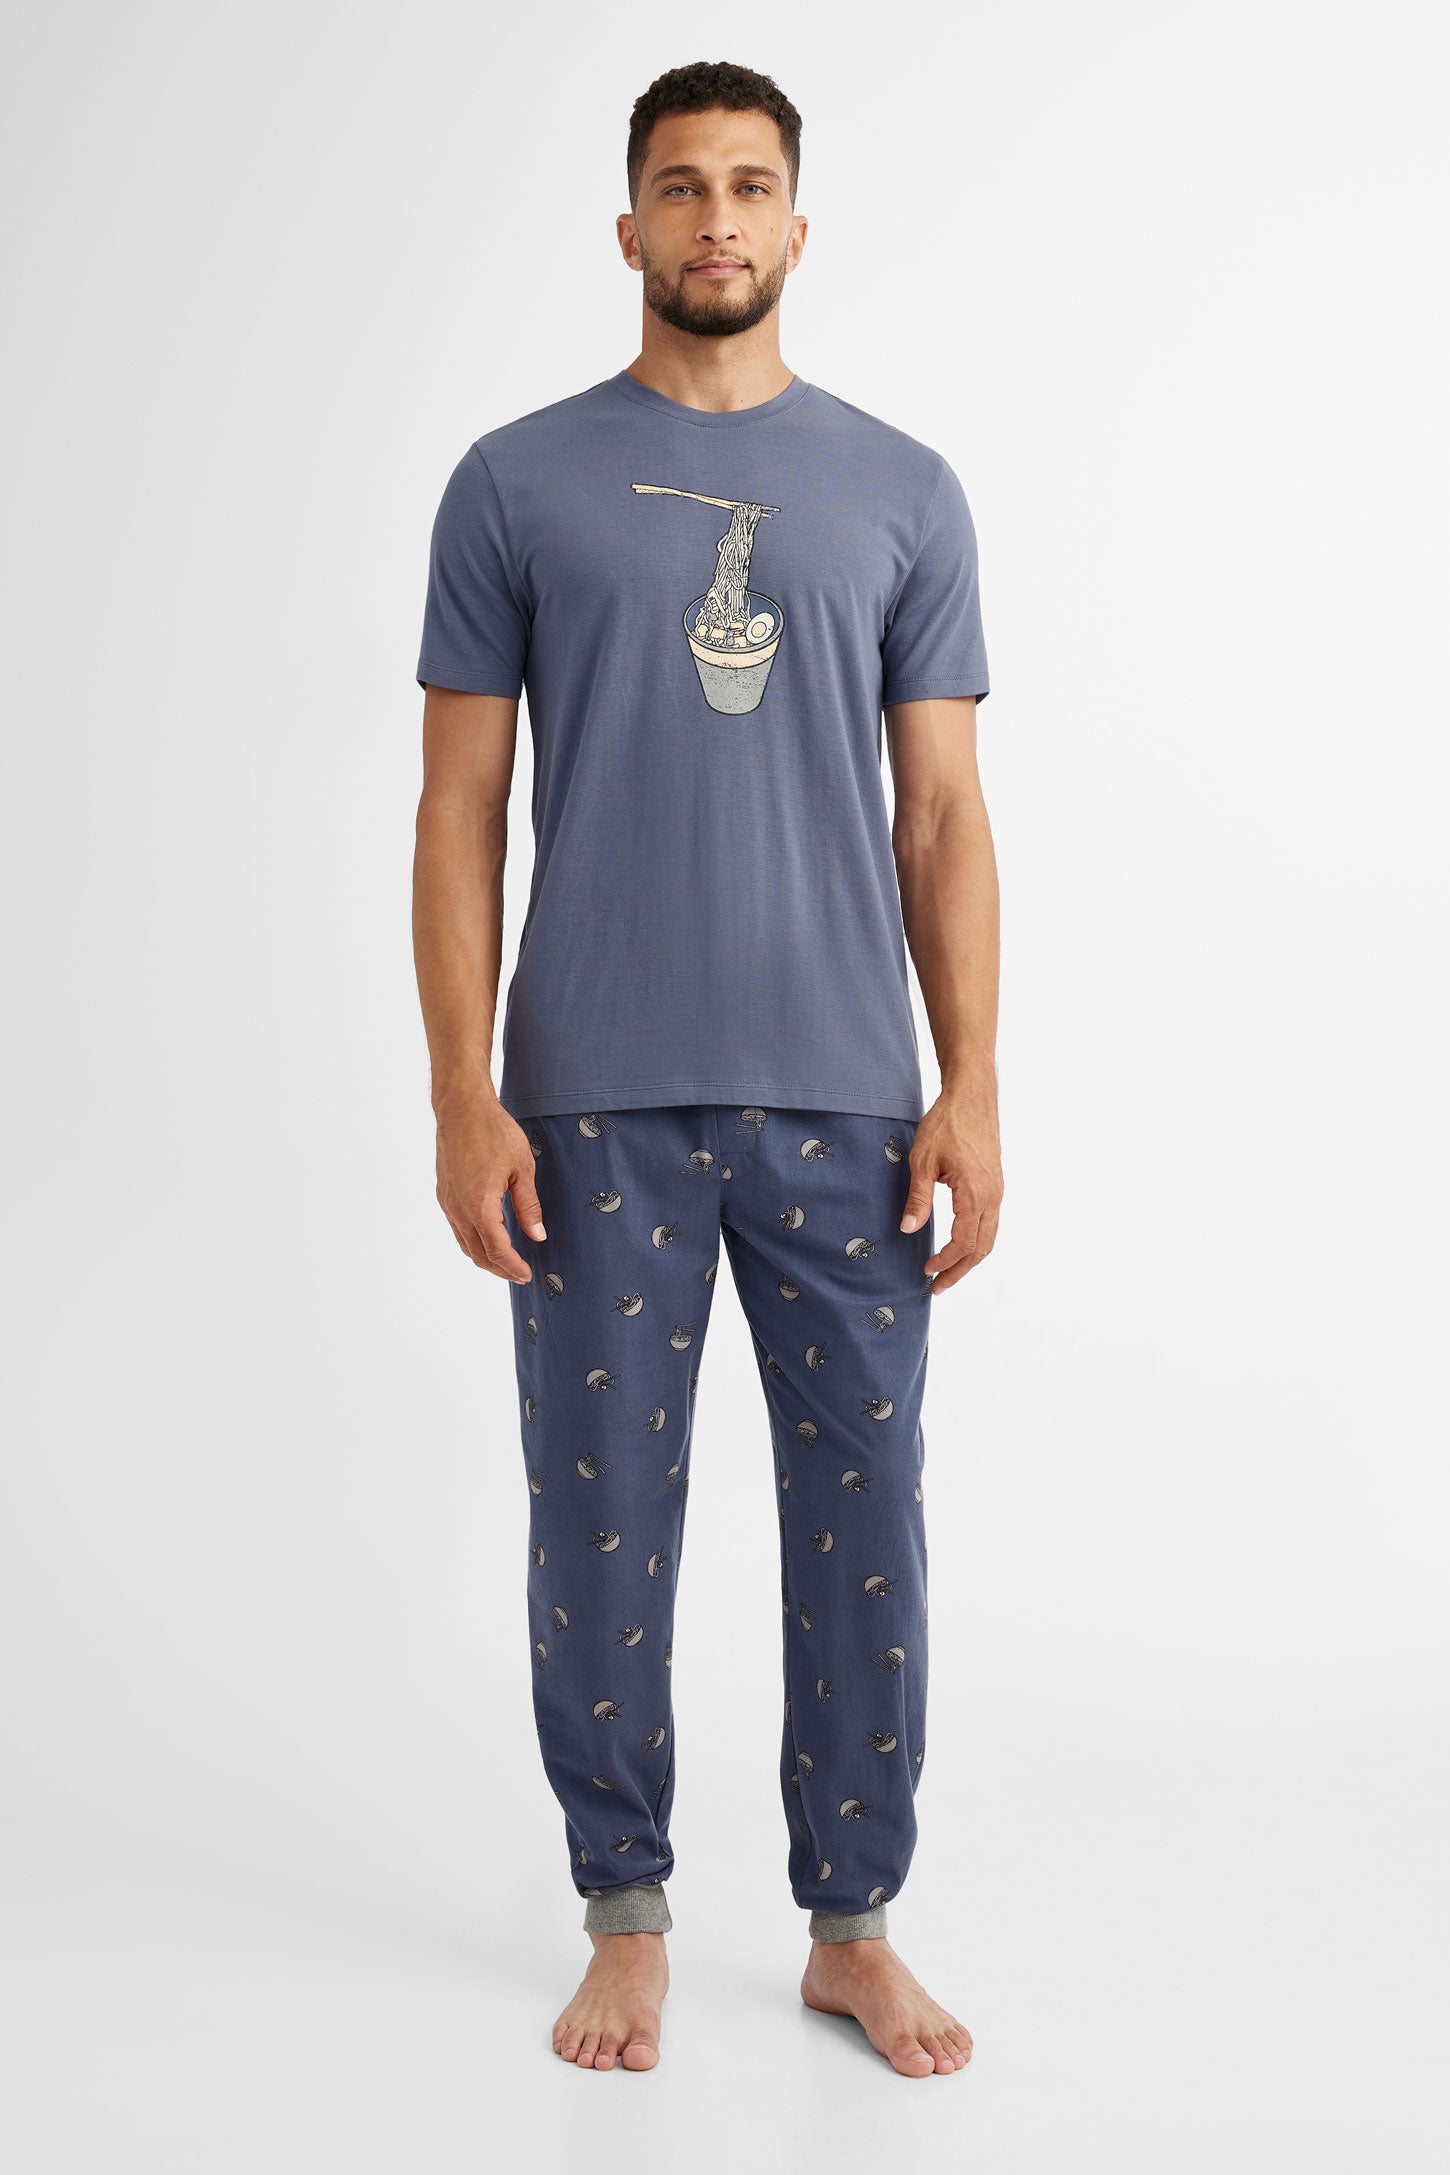 Duos futés, T-shirt pyjama imprimé, 2/40$ - Homme && MARIN